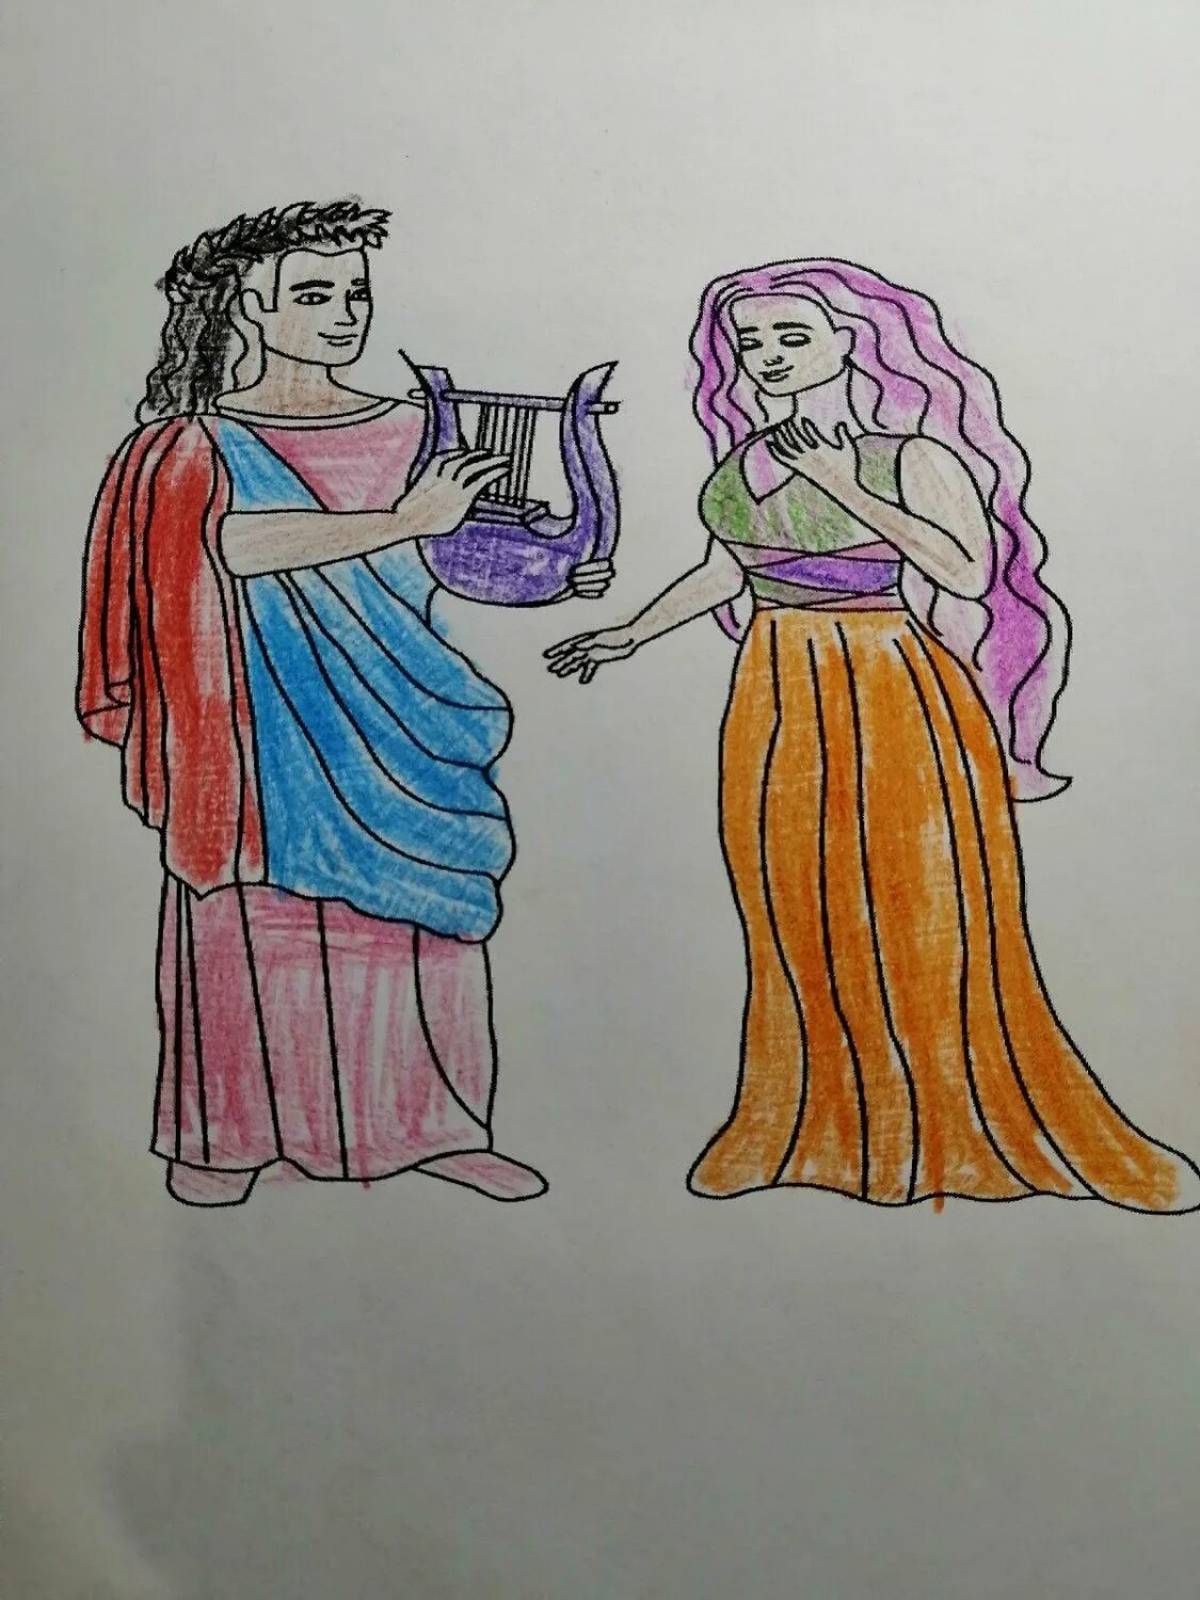 Awe inspiring Orpheus and Eurydice coloring book